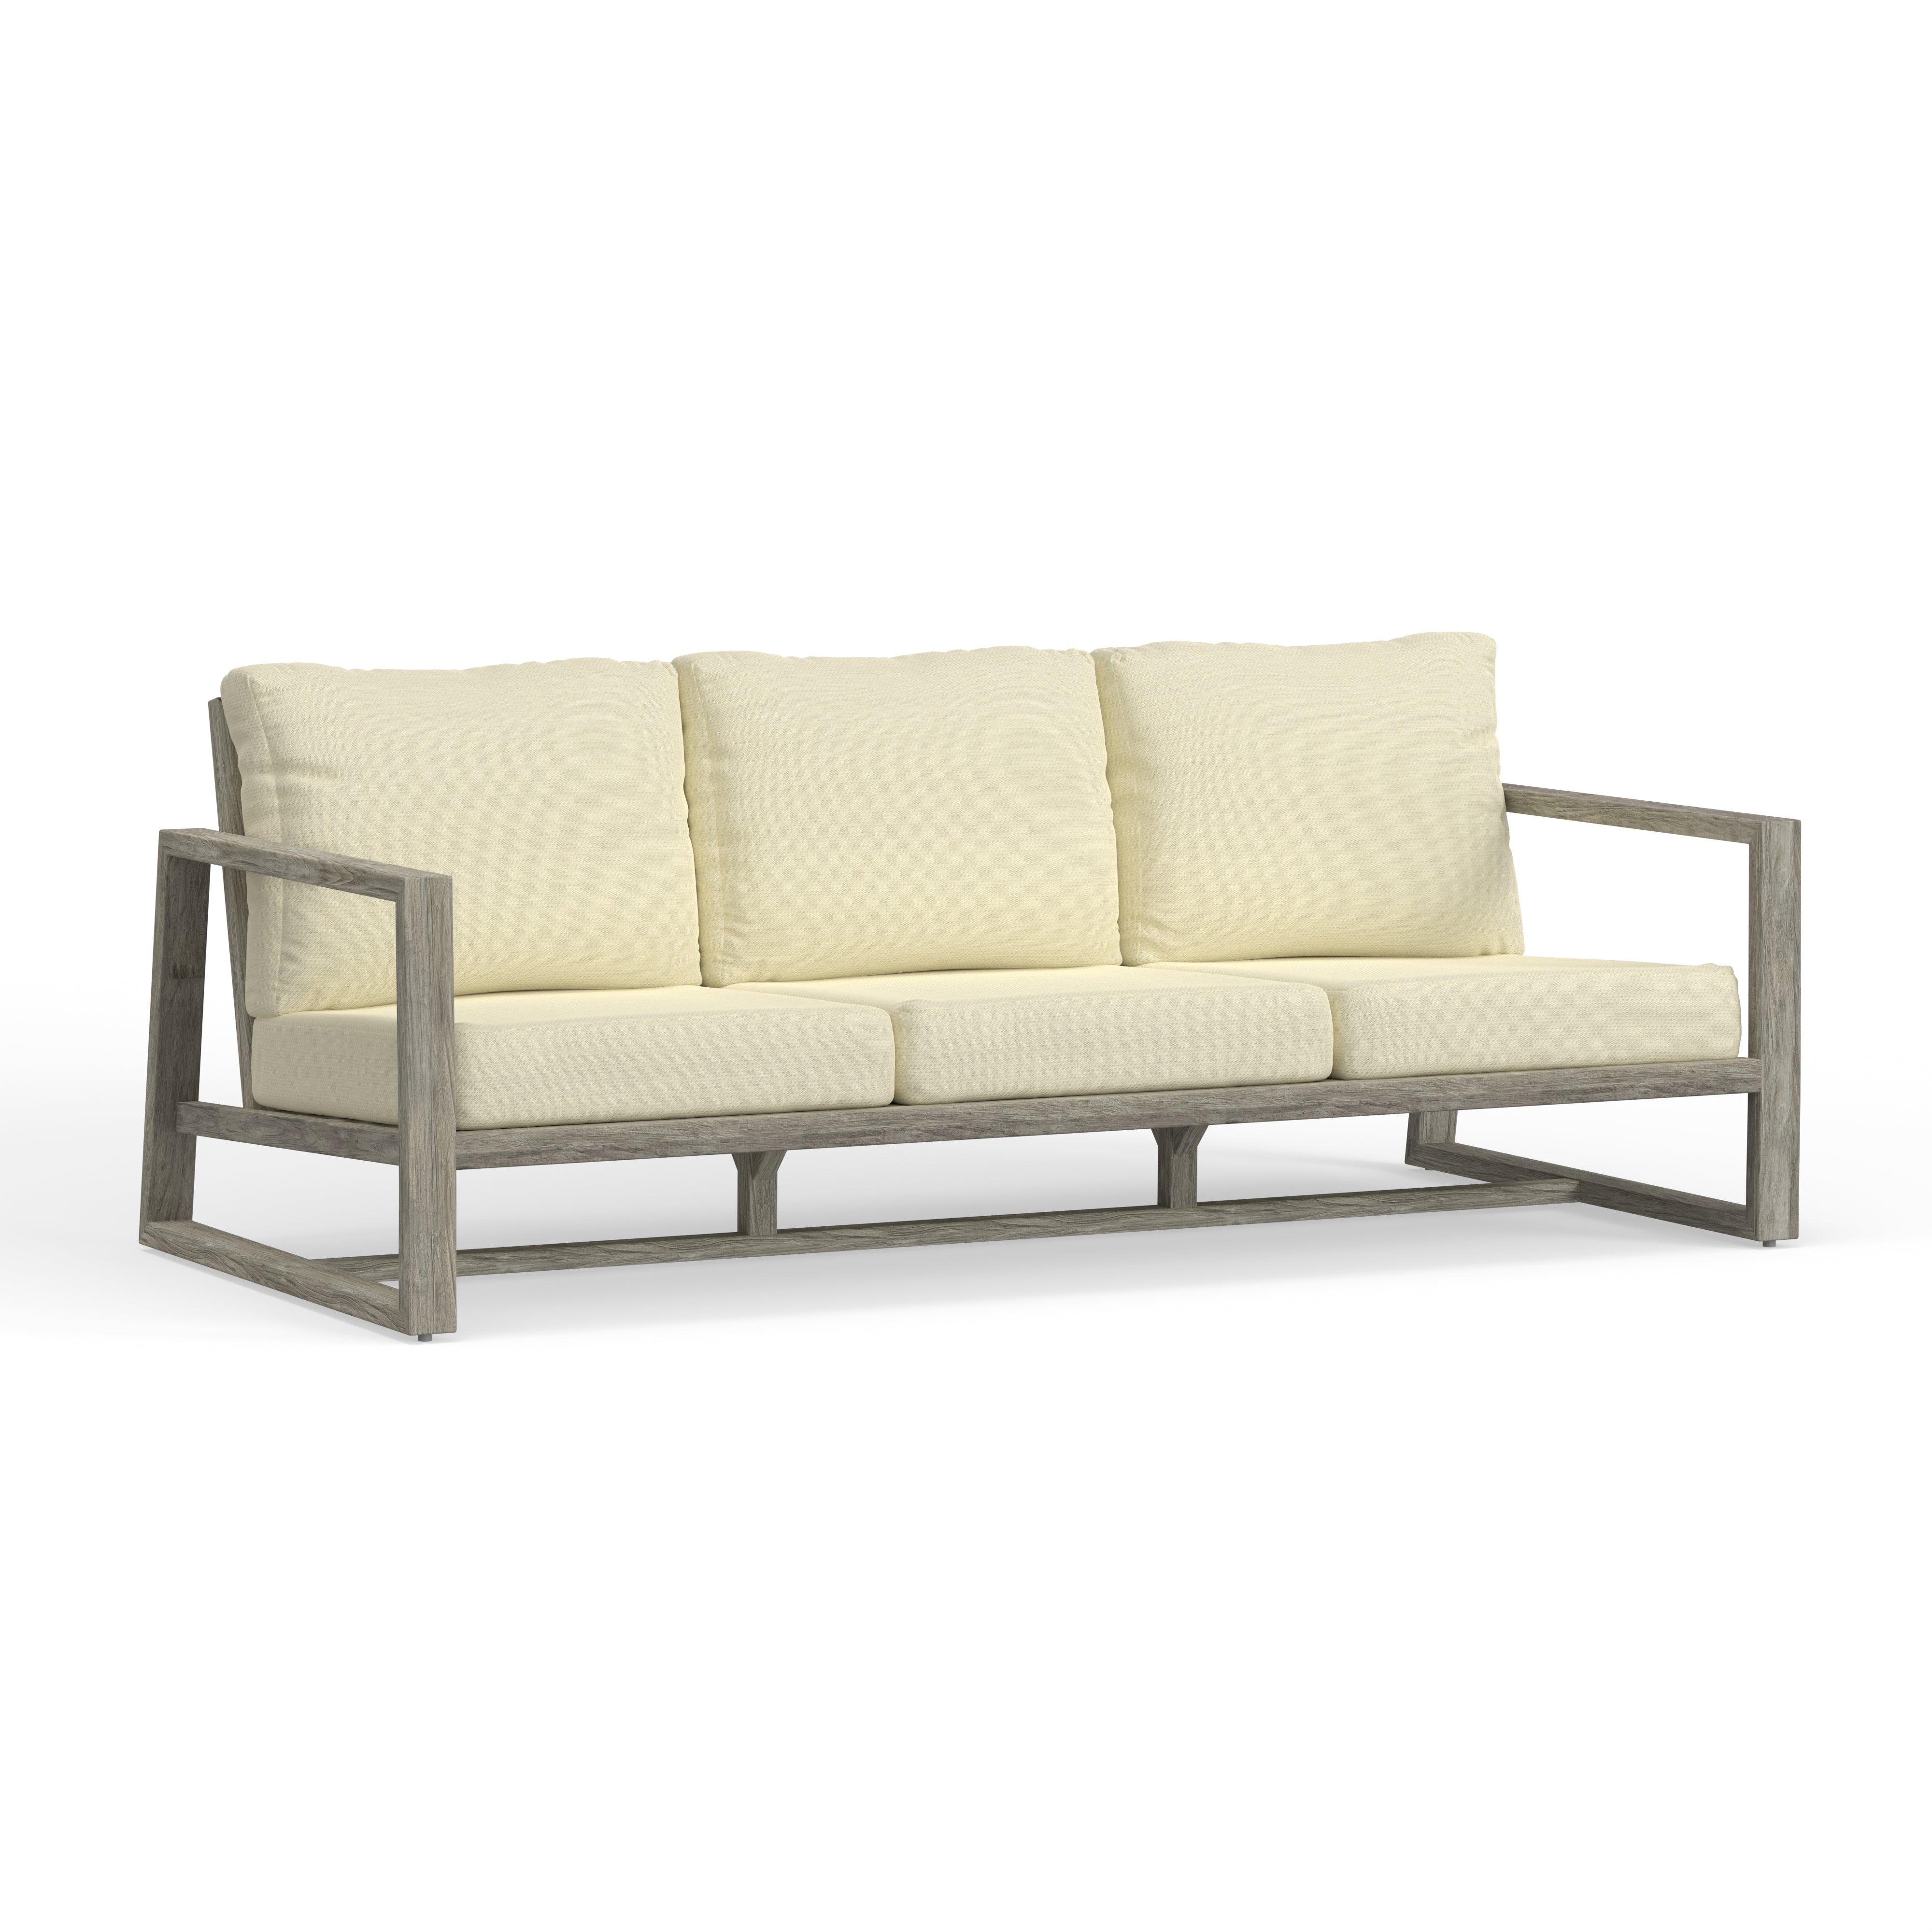 Most Comfortable Modern Outdoor Sofa